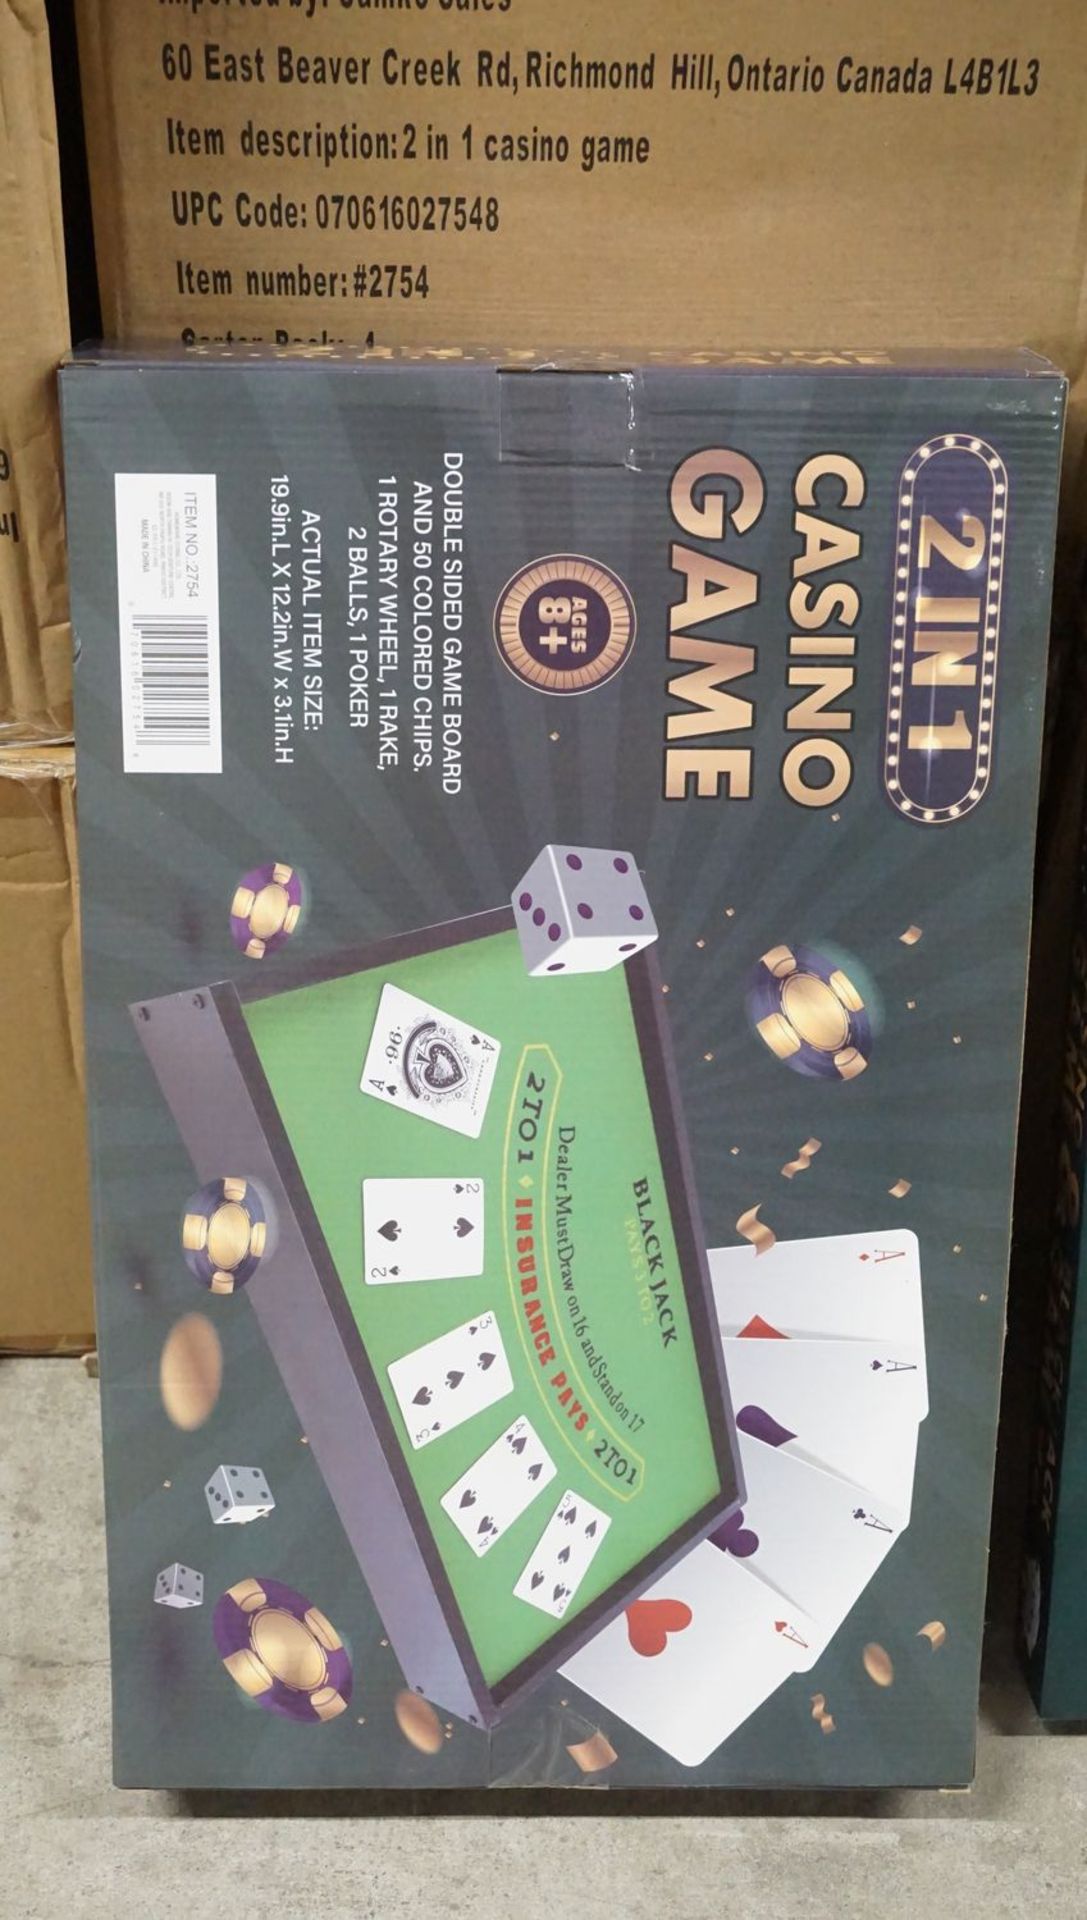 UNITS - CASINO 2-IN-1 BLACK JACK & CRAPS GAME TABLE - Image 2 of 2